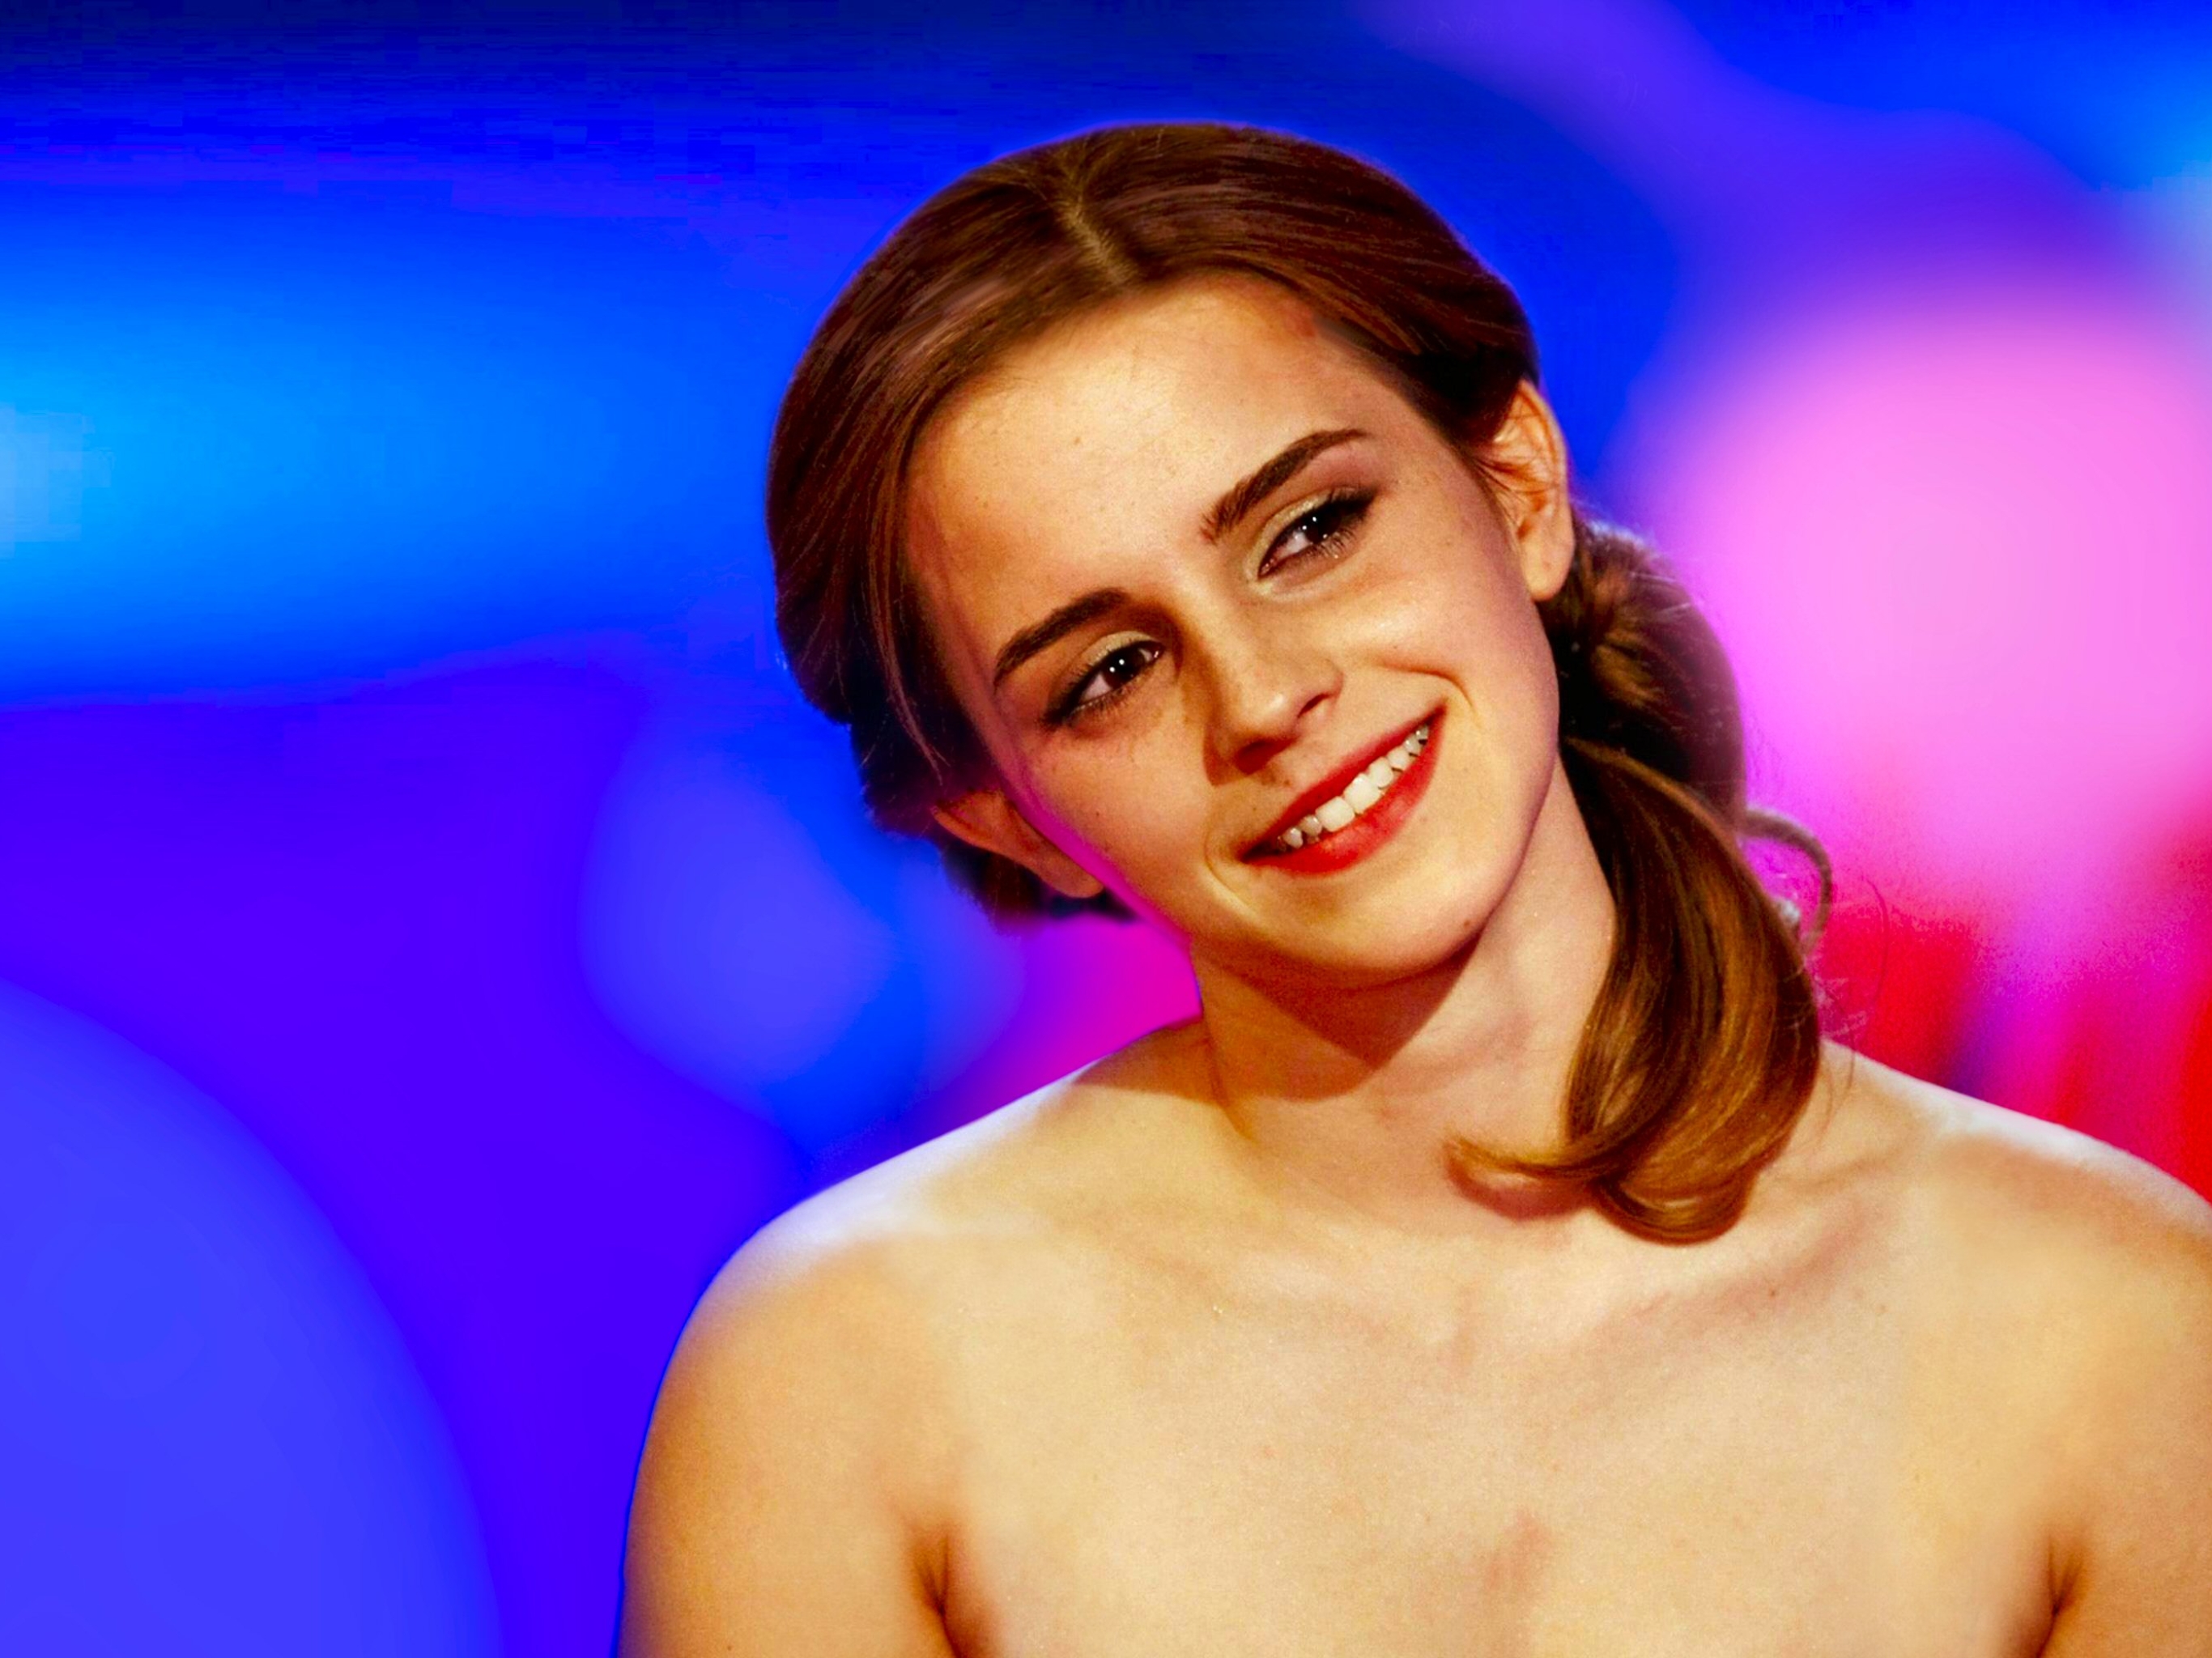 Emma Watson's Nudes